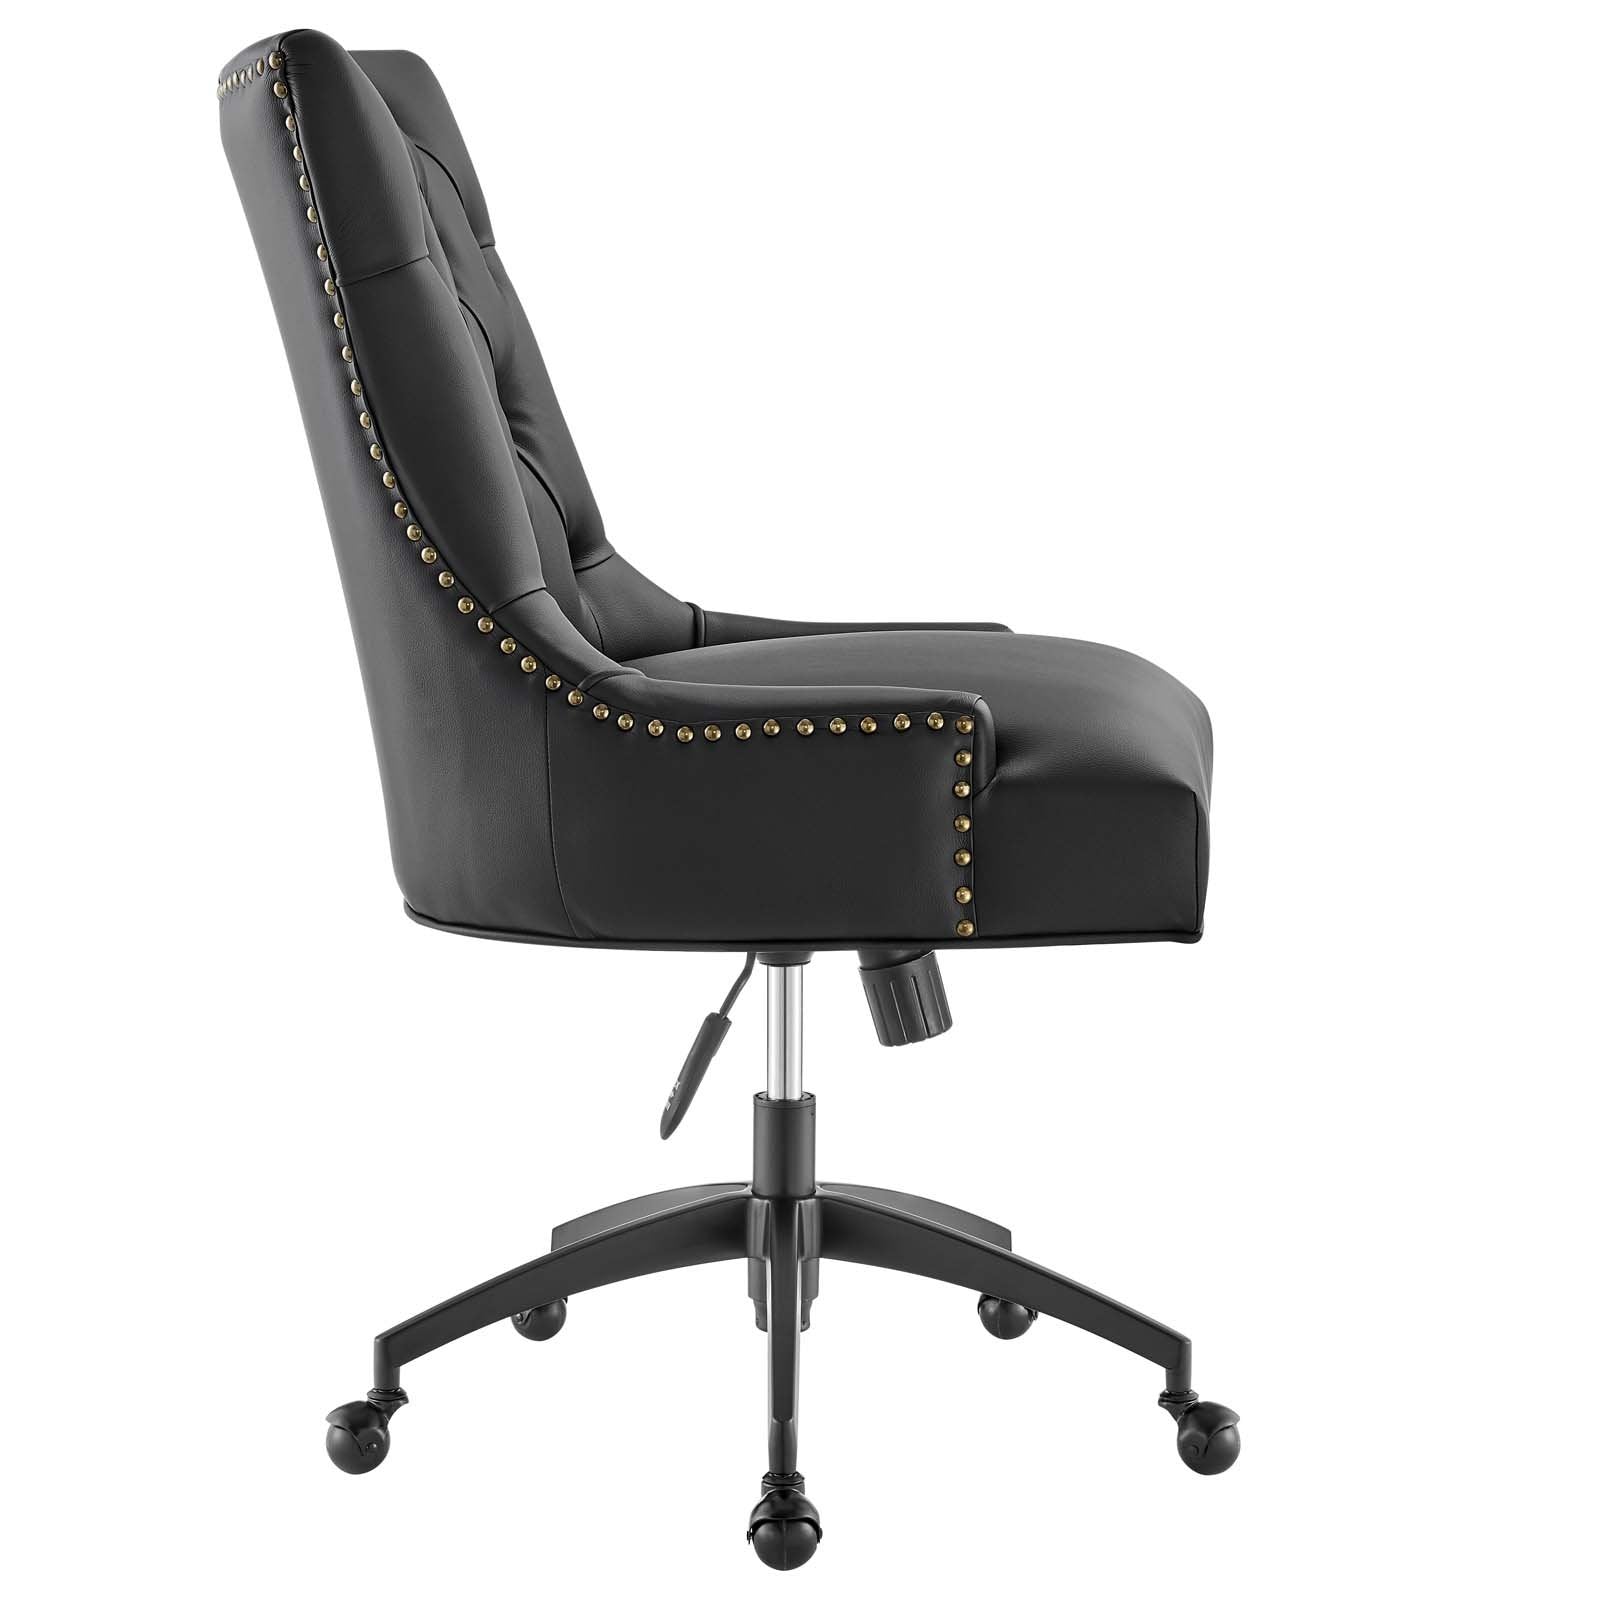 Regent Tufted Vegan Leather Office Chair - East Shore Modern Home Furnishings